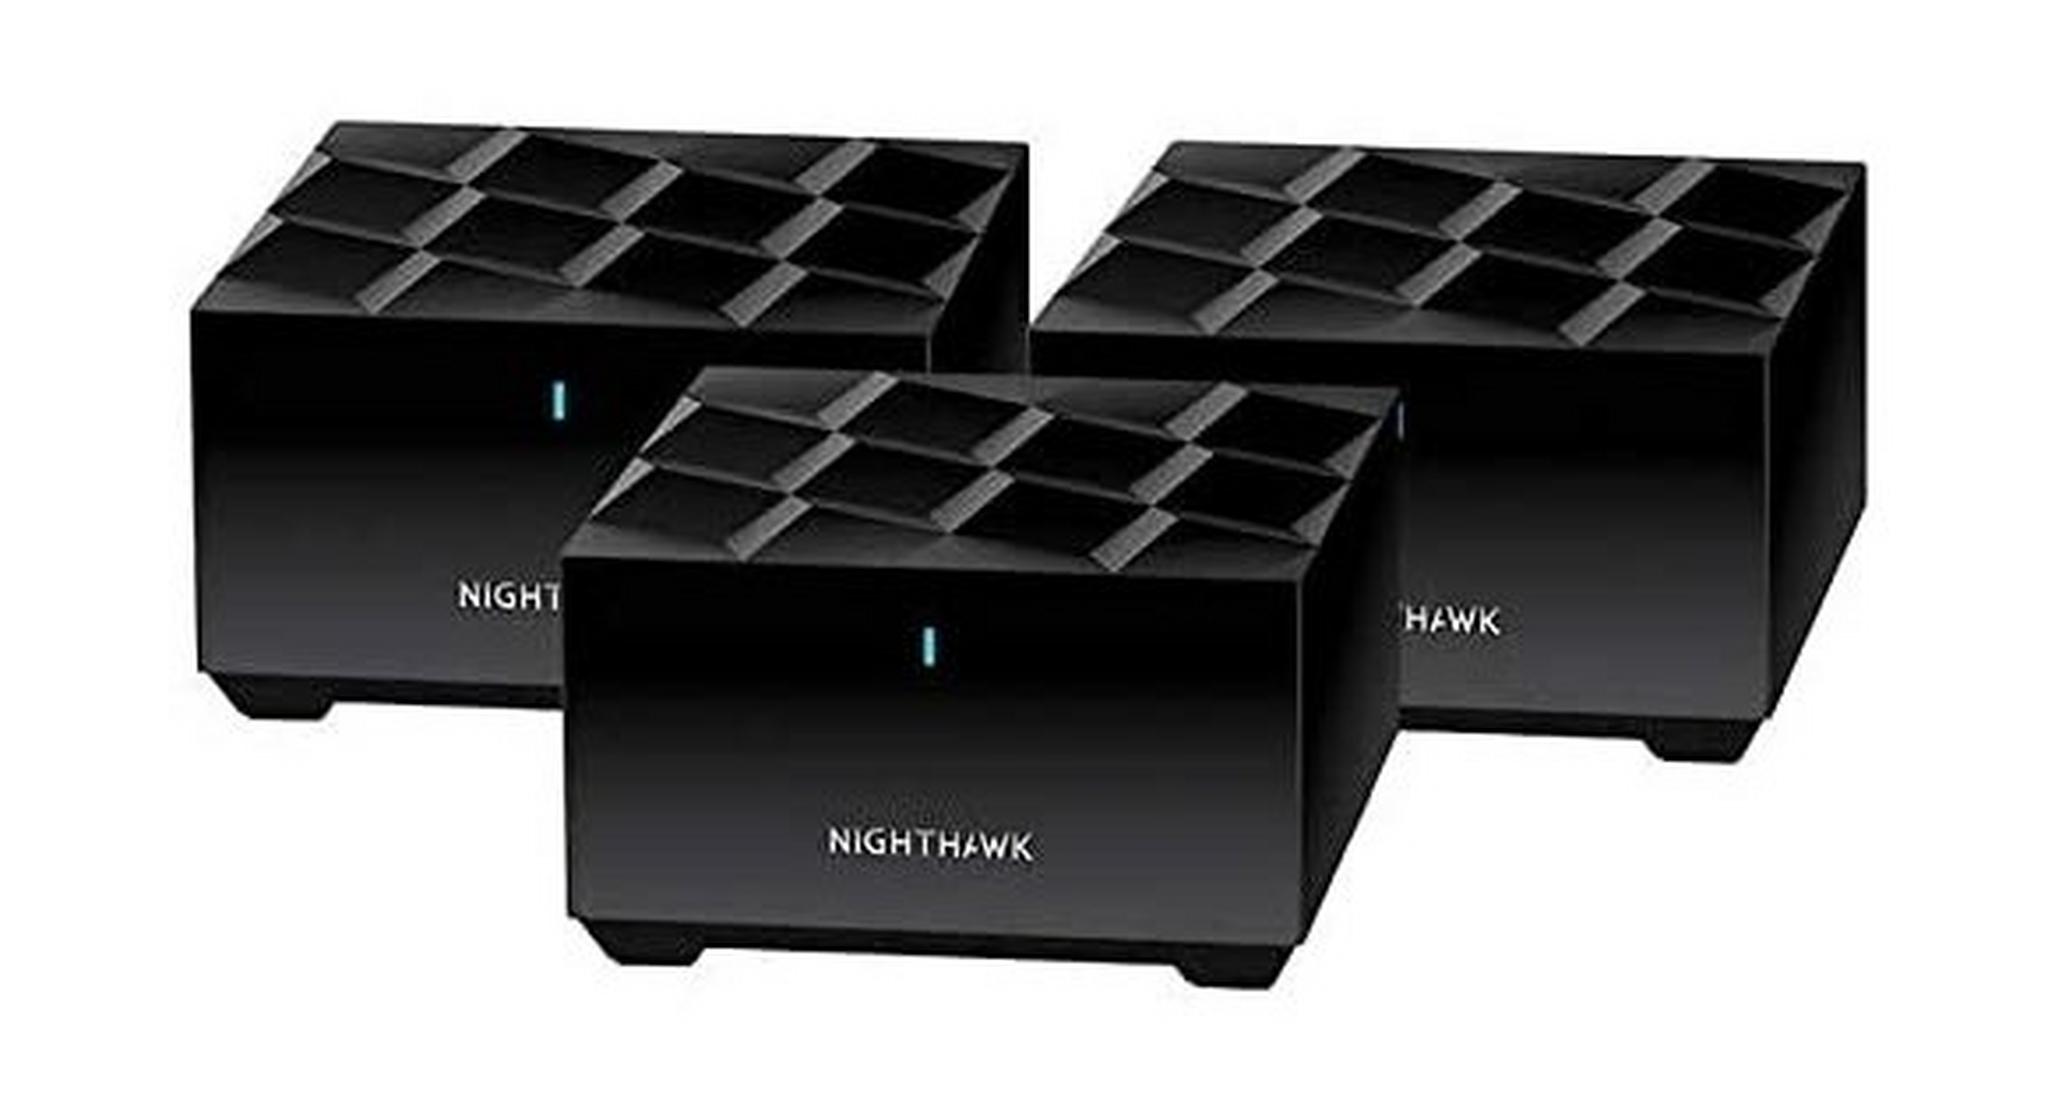 Netgear Nighthawk Whole Home Mesh WiFi 6 System, 3-Pack - (MK63-100NAS)